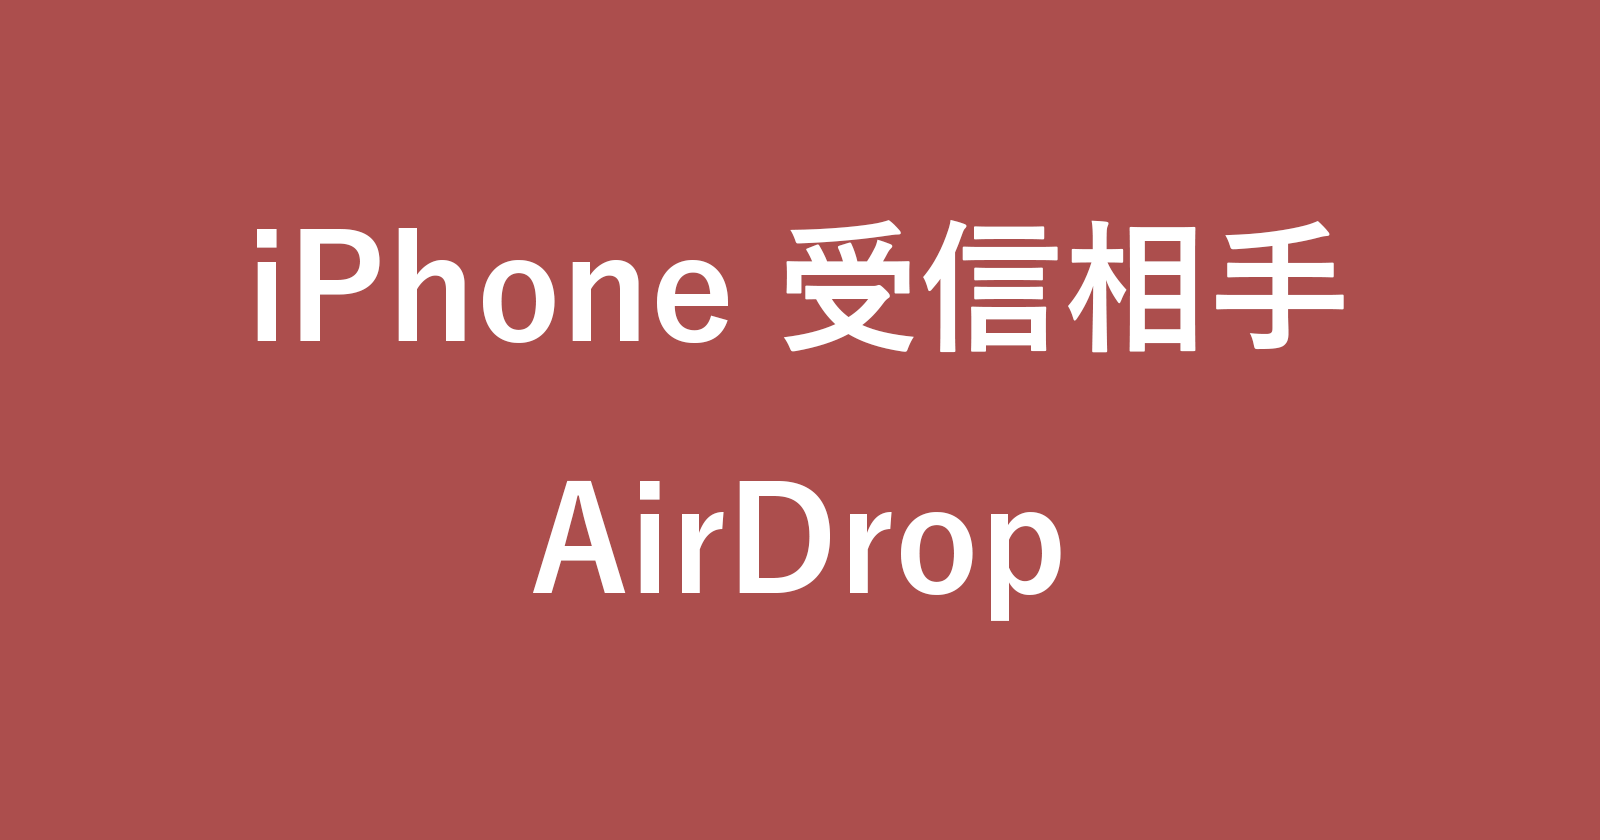 iphone airdrop set